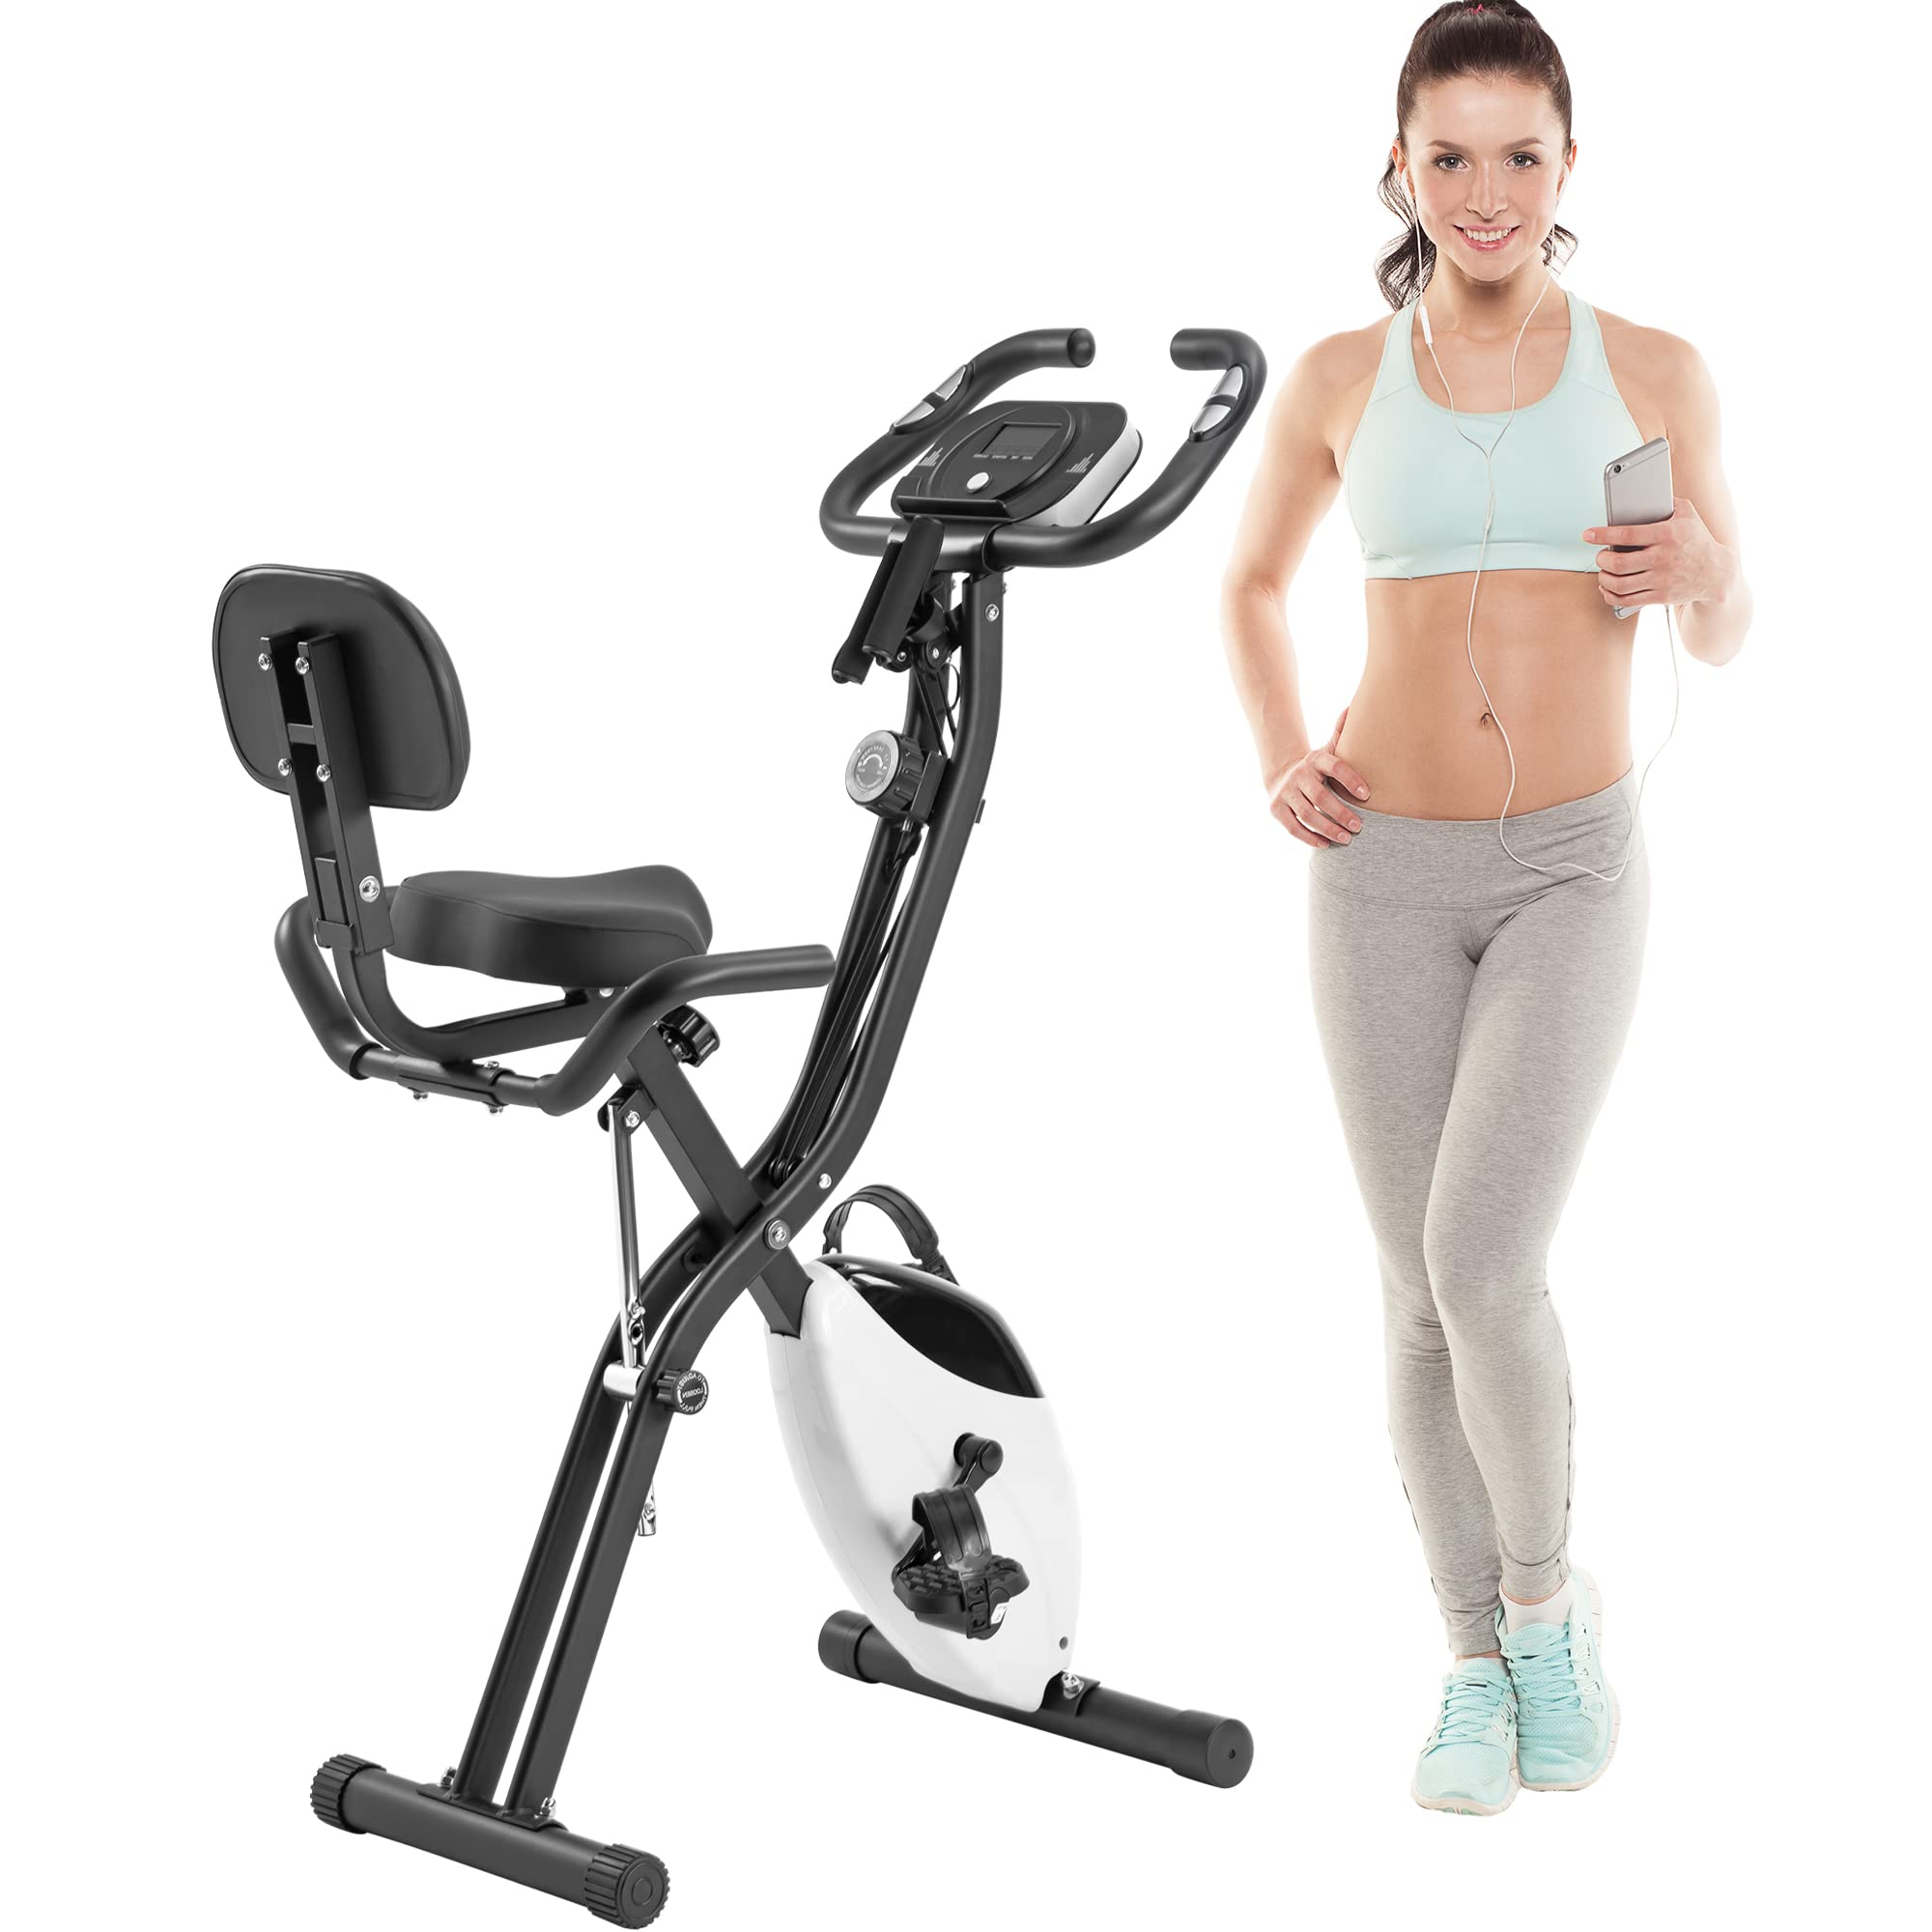 Exercise Bike Foldable Fitness IndoorUpright and Recumbent X-Bike with 10-Level Adjustable ResistanceBands and Backrest